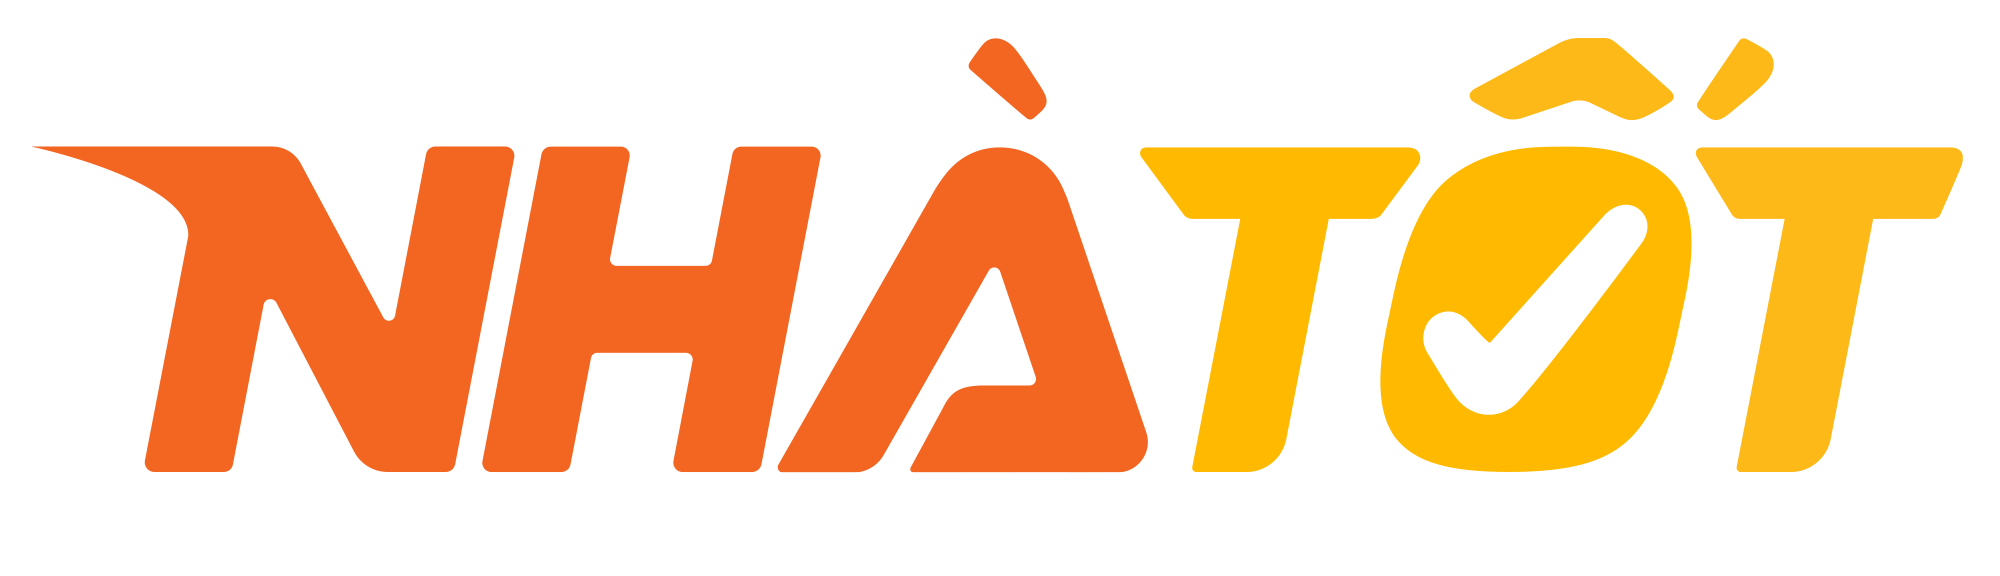 nhatot.com